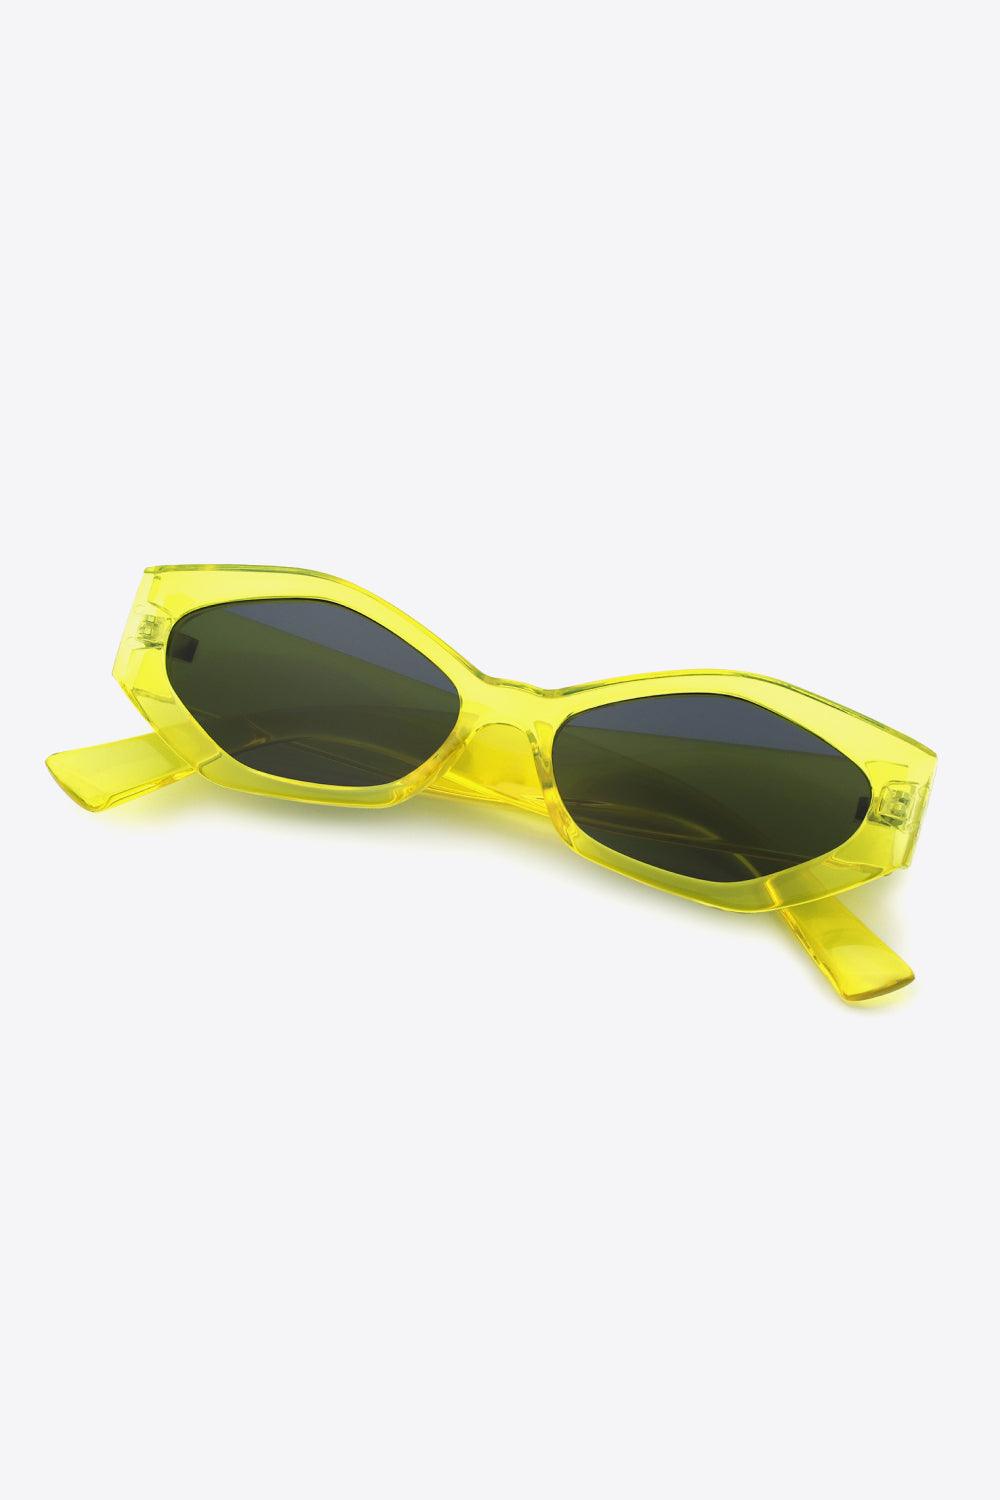 Stylish Ladies' Wayfarer Sunglasses: Polycarbonate Frames for Lasting Comfort